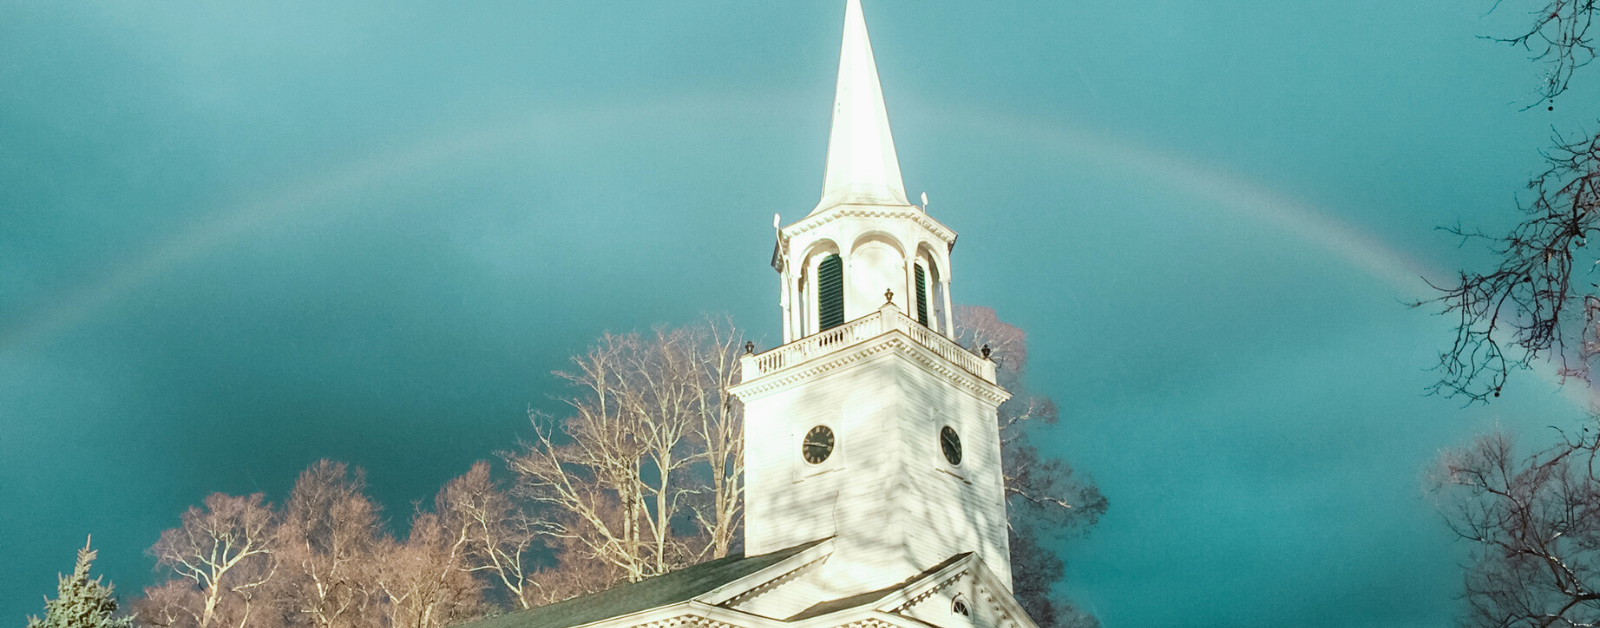 white church steeple against a dark blue sky with a rainbow behind